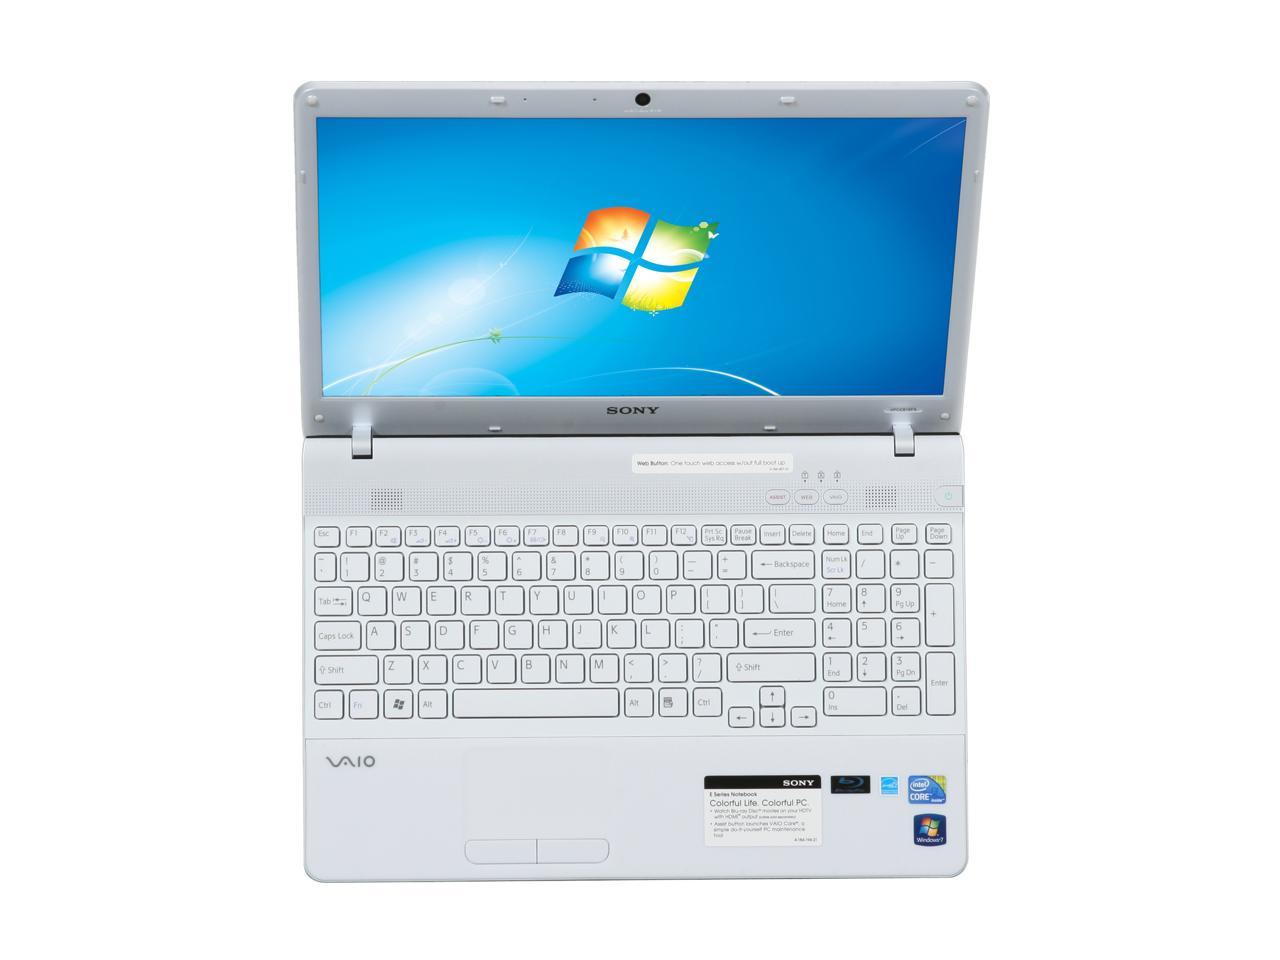 SONY Laptop VAIO E Series Intel Core i3 1st Gen 330M (2.13GHz) 4GB